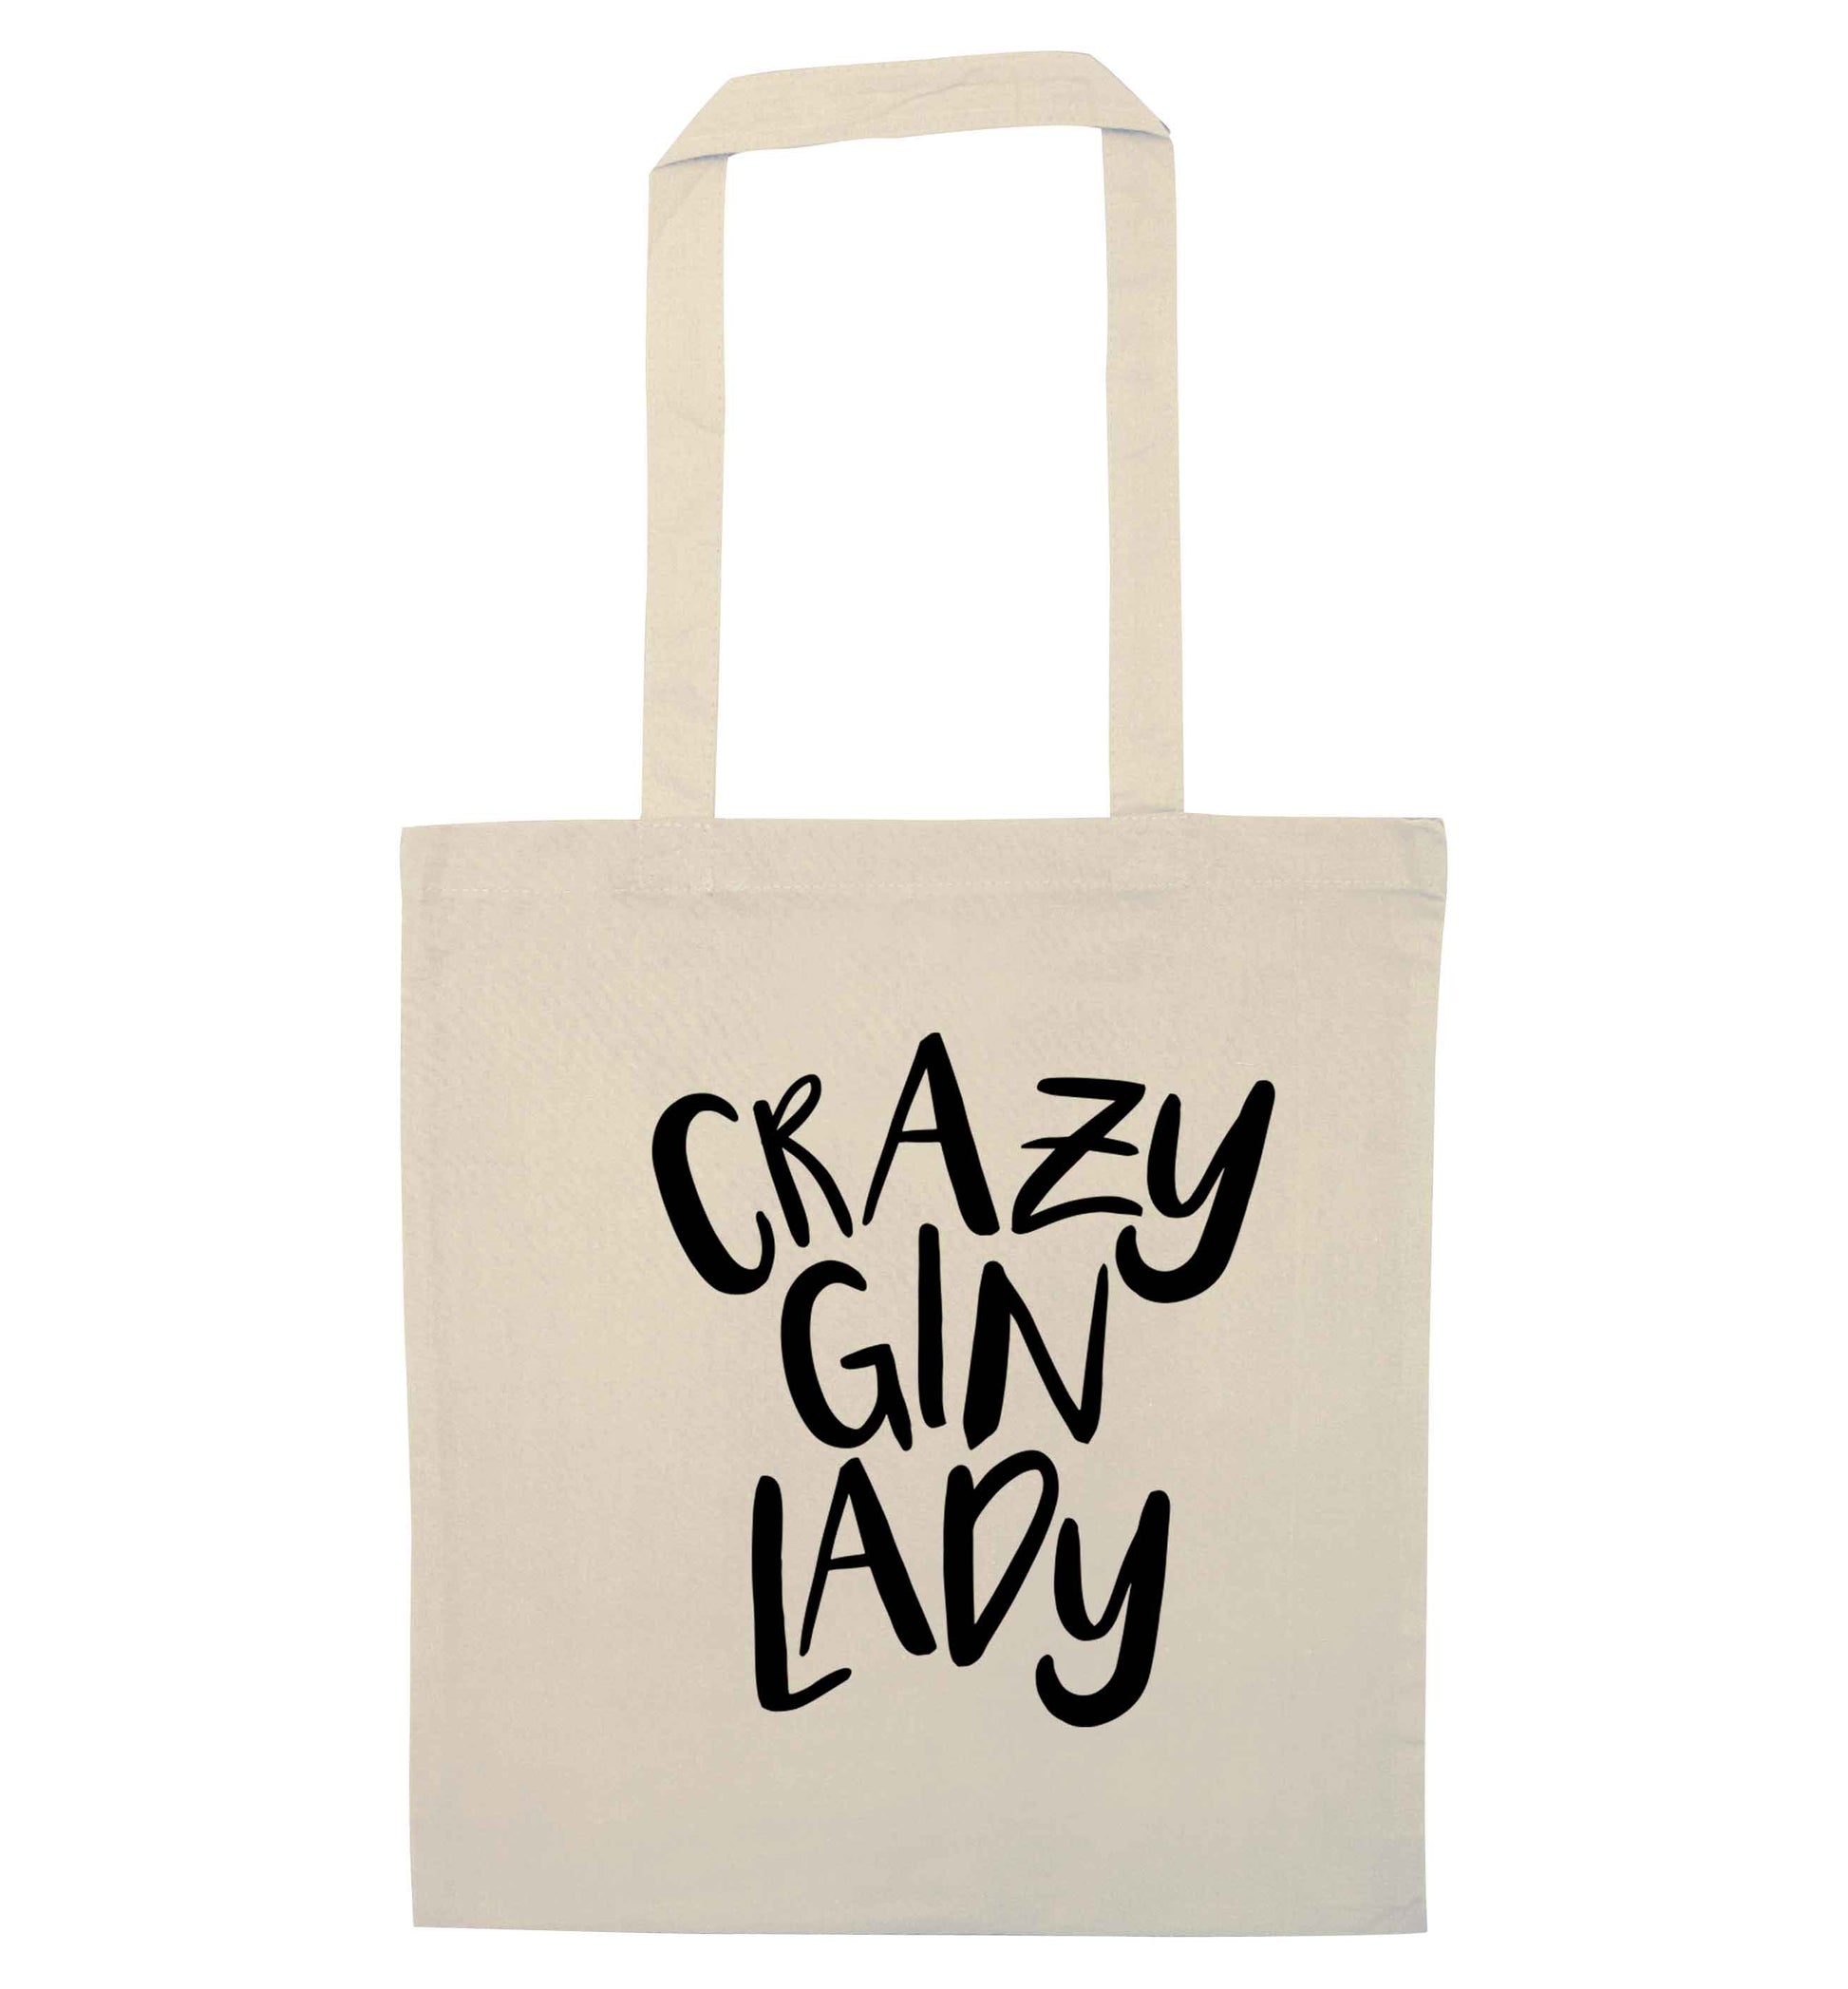 Crazy gin lady natural tote bag